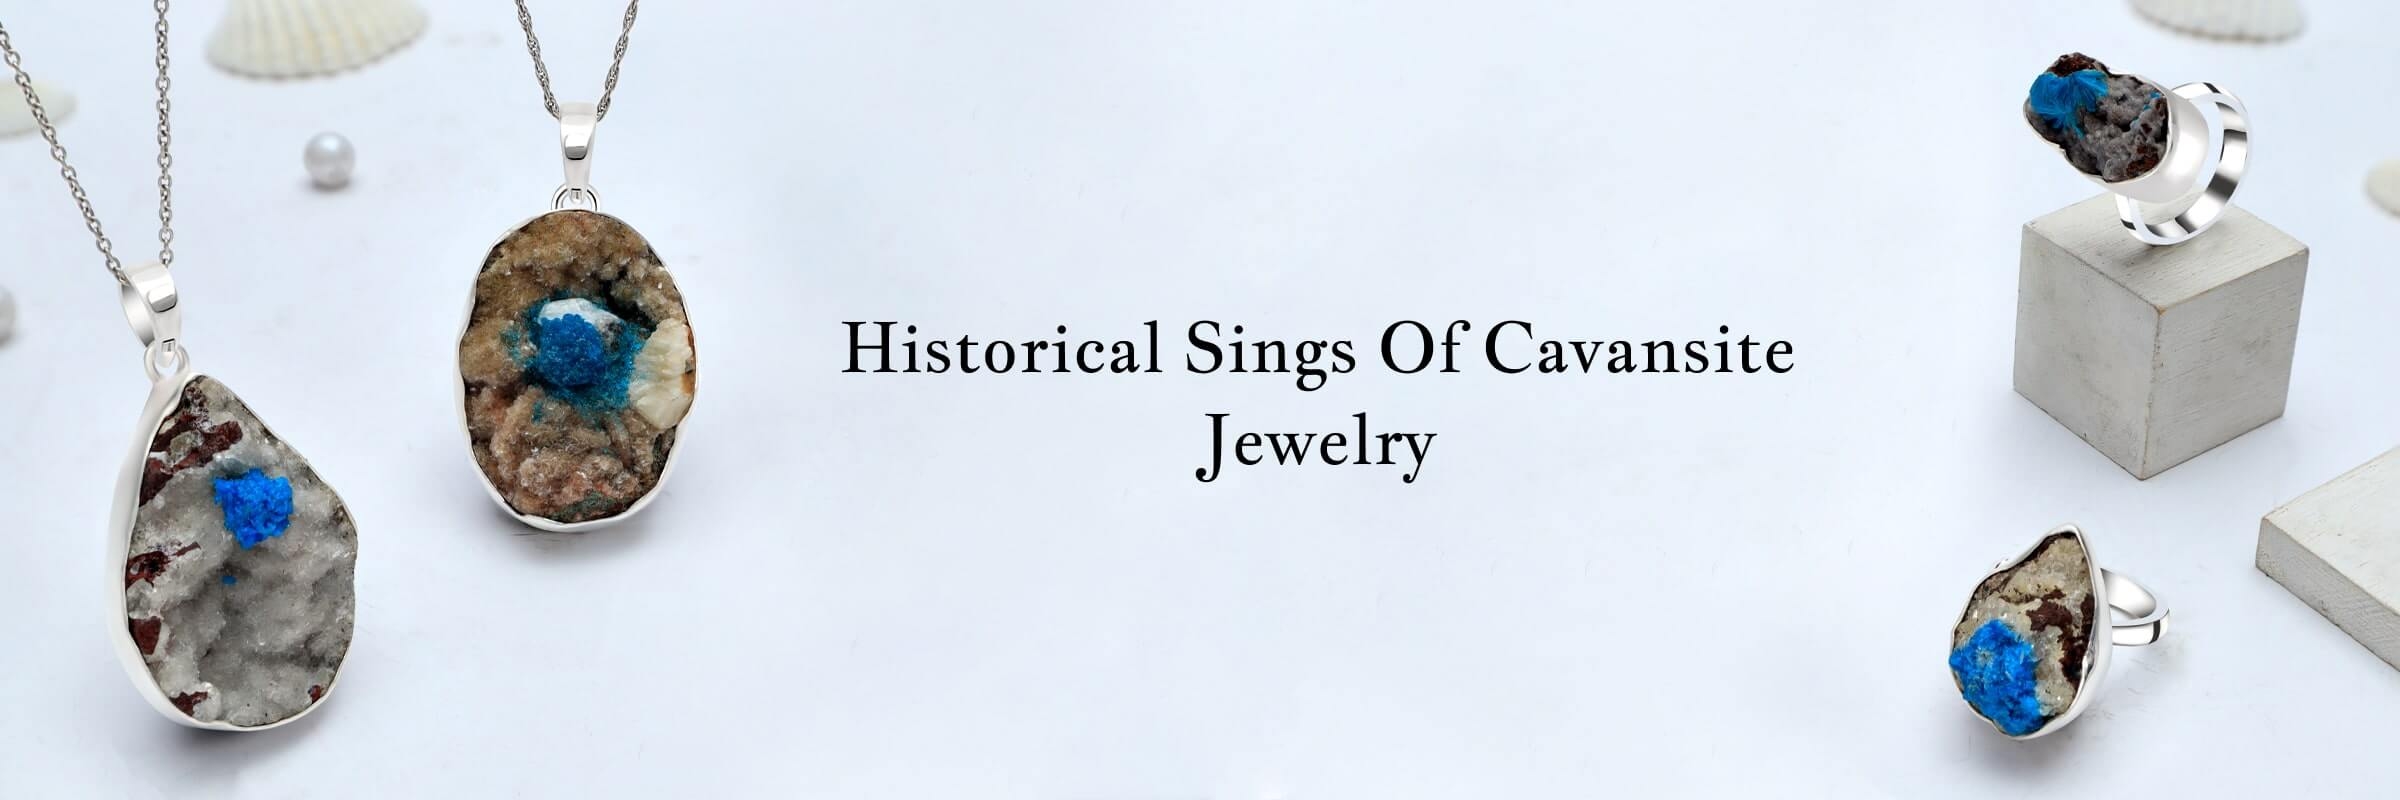 Past Era Says of Cavansite Jewelry